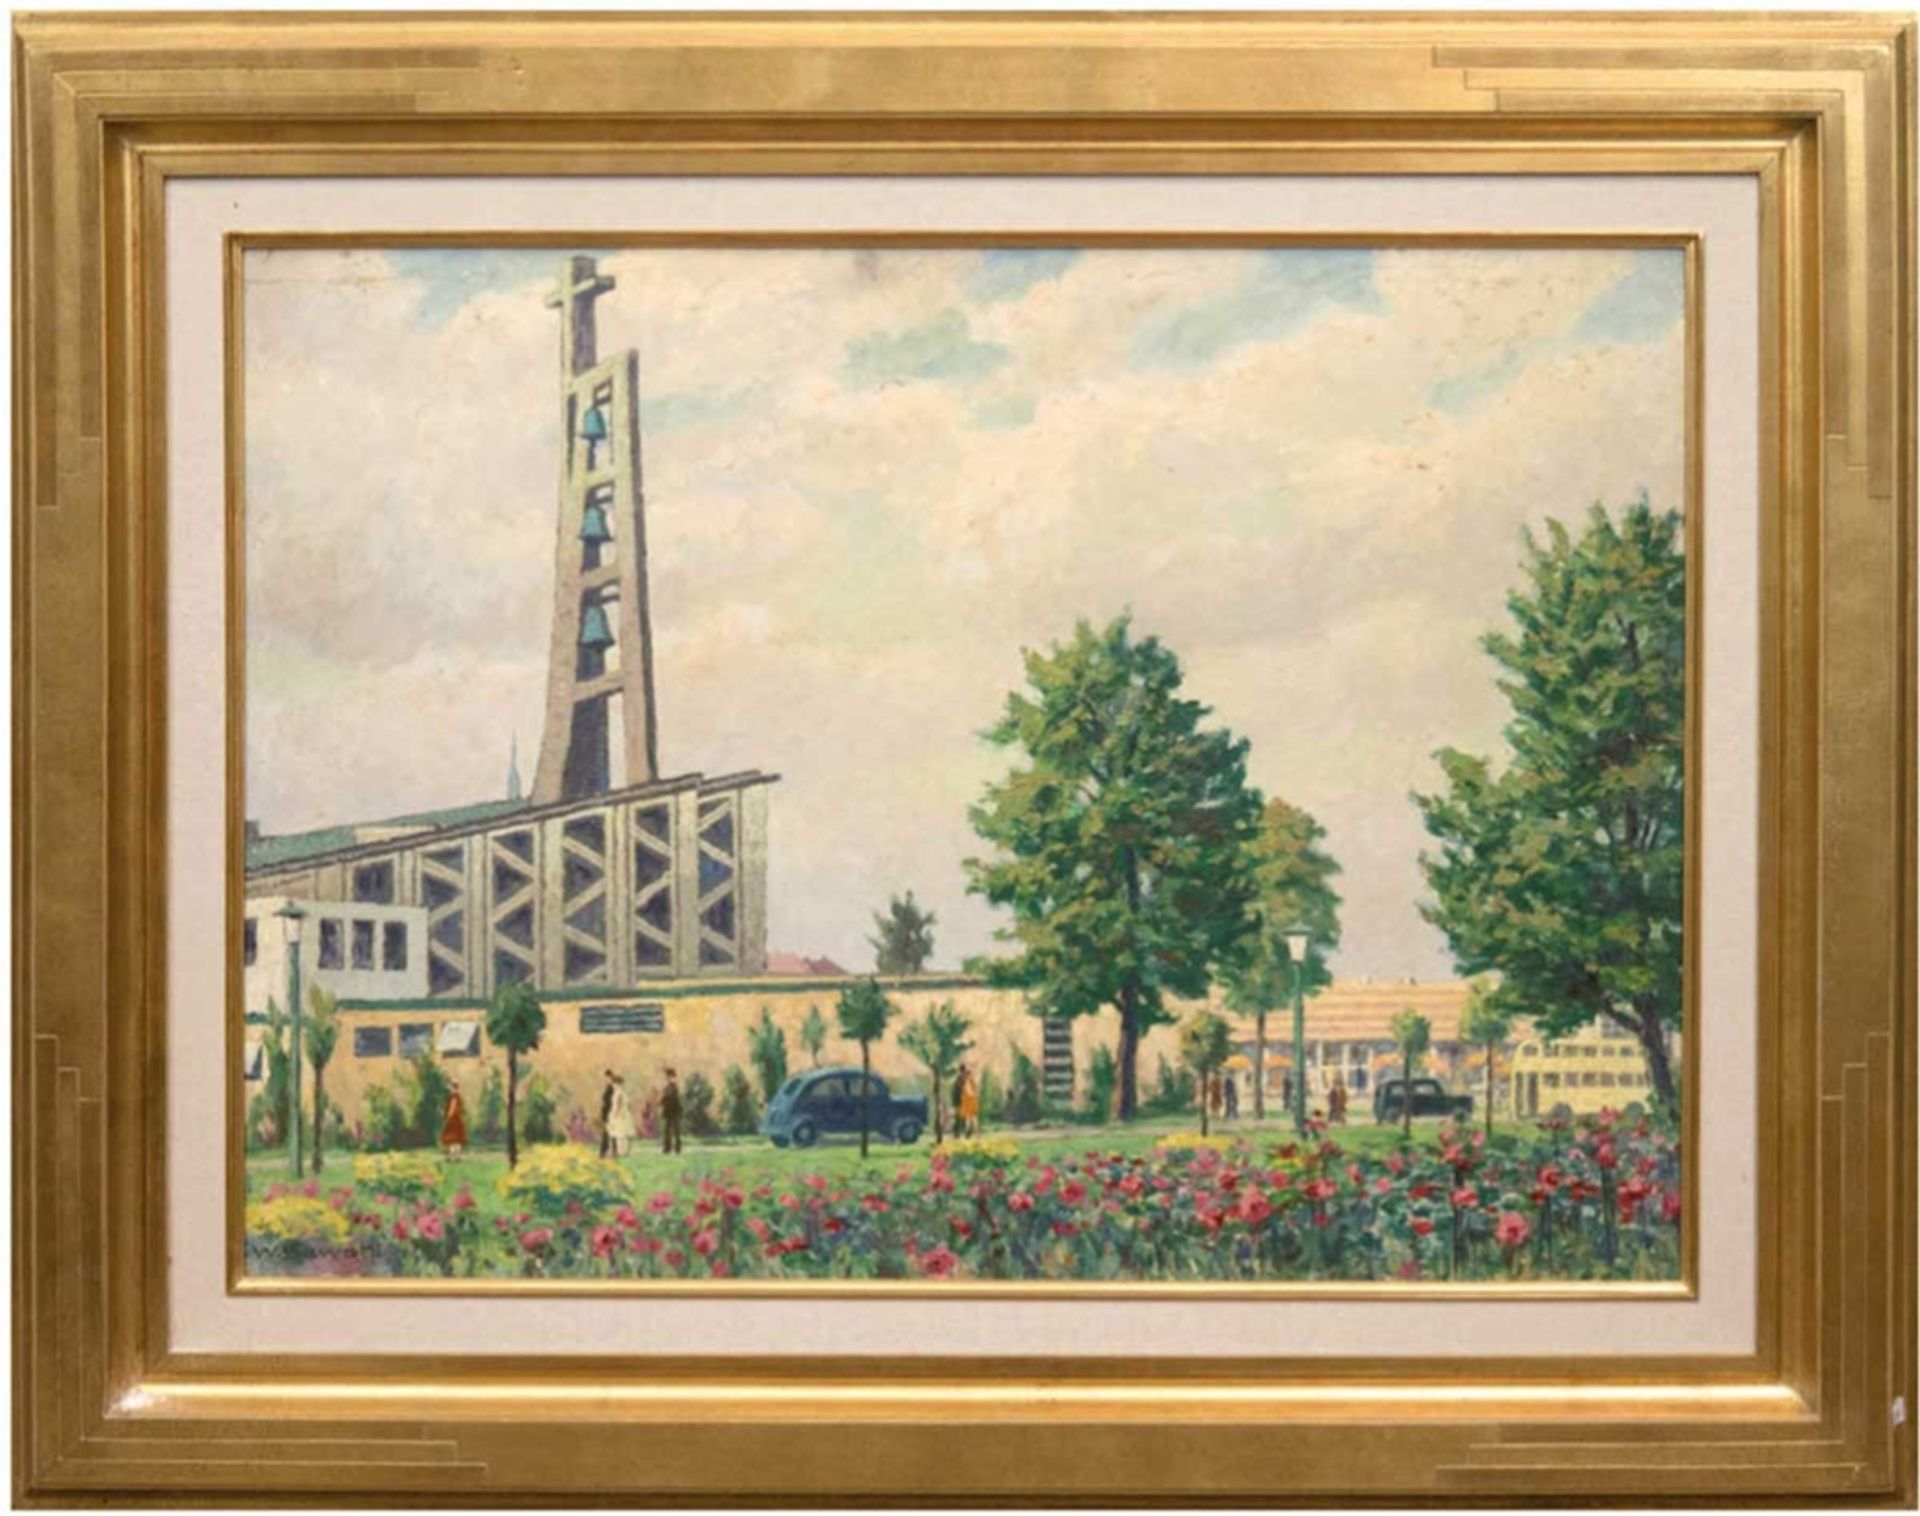 Sewohl, Waldemar (1887 Wismar-1967 Berlin) "Pfarrkirche St. Laurentius in Berlin-Mitte", Öl/HF.., s